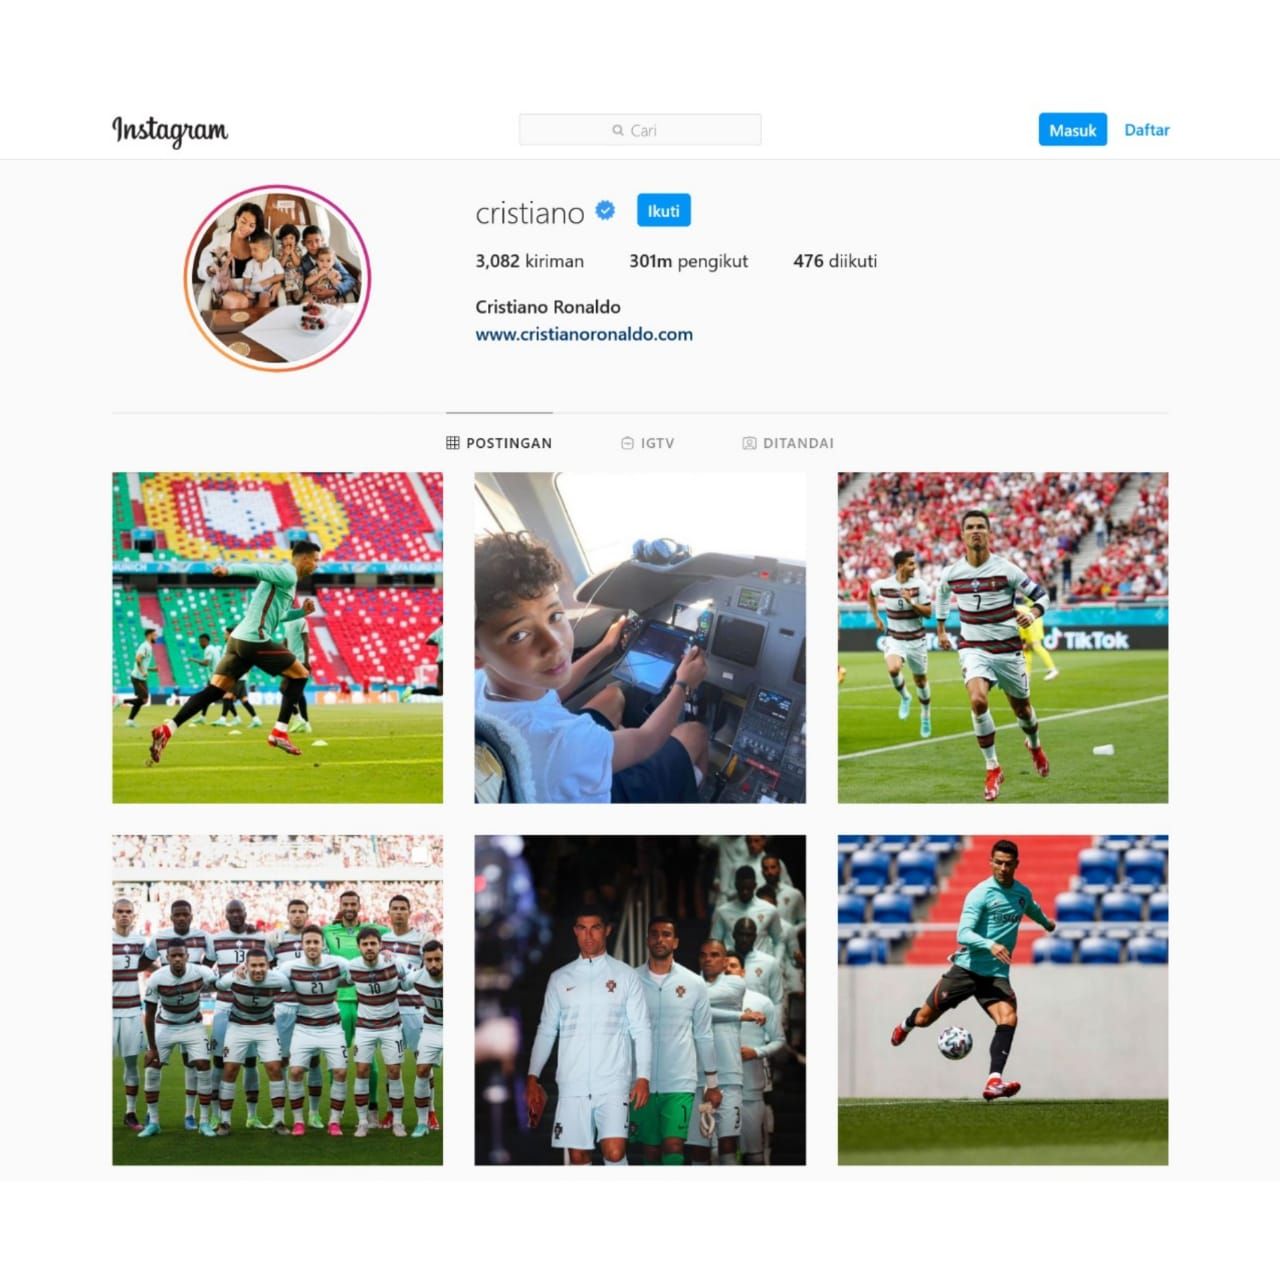 tangkapan layar instagram @crististiano: Cristiano Ronaldo Manusia Dengan Followers 301 Juta, Fantantis Inilah Pendapatannya Dari Instagram